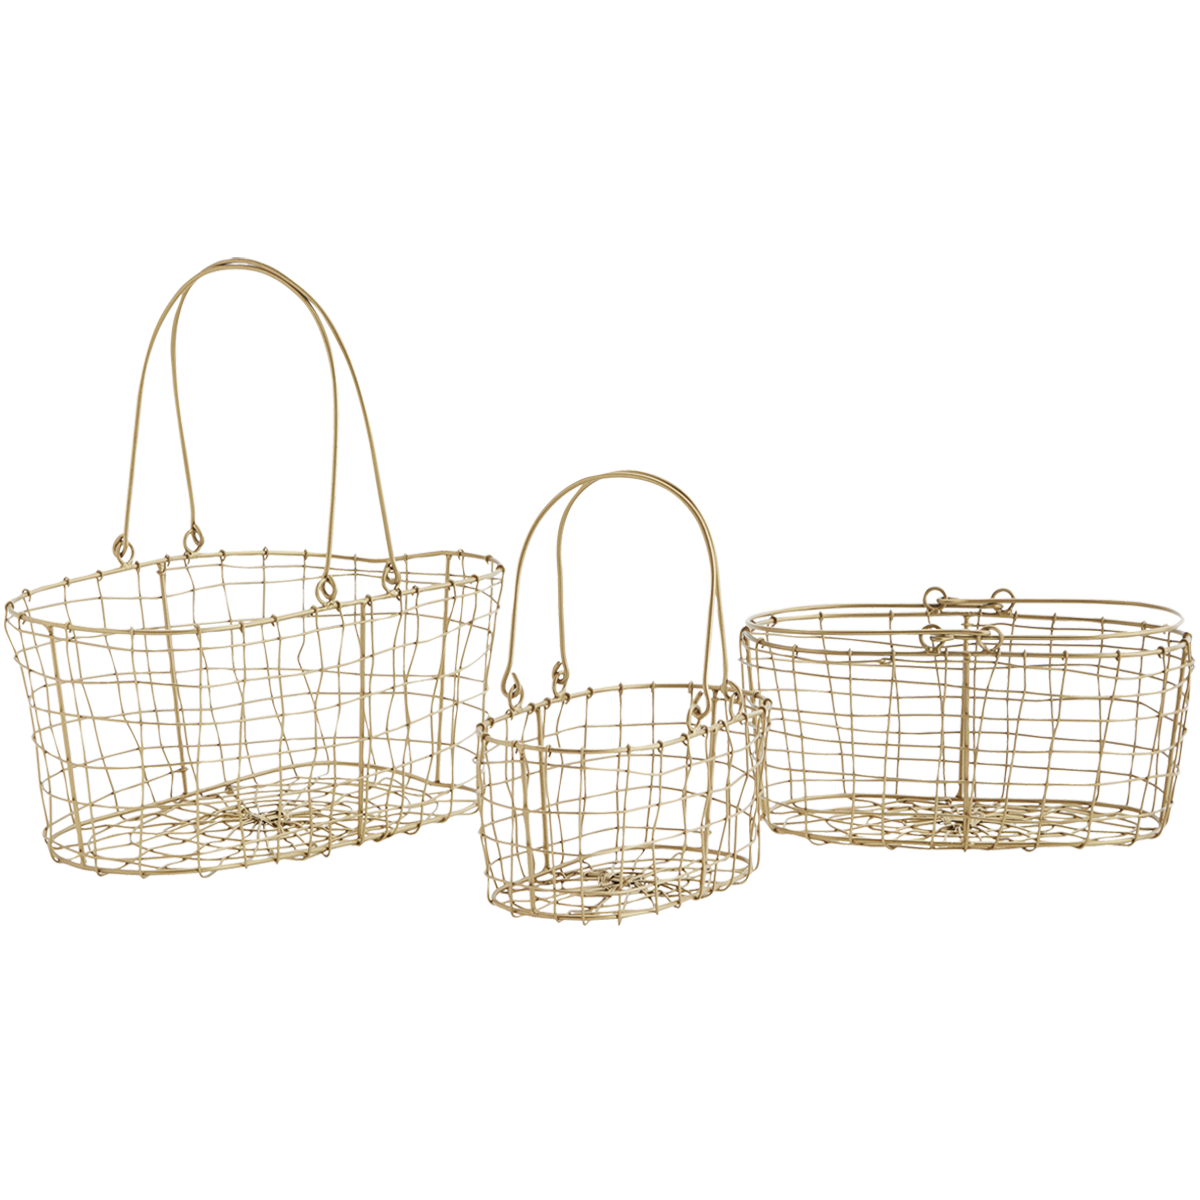 Oval iron baskets w/ handles